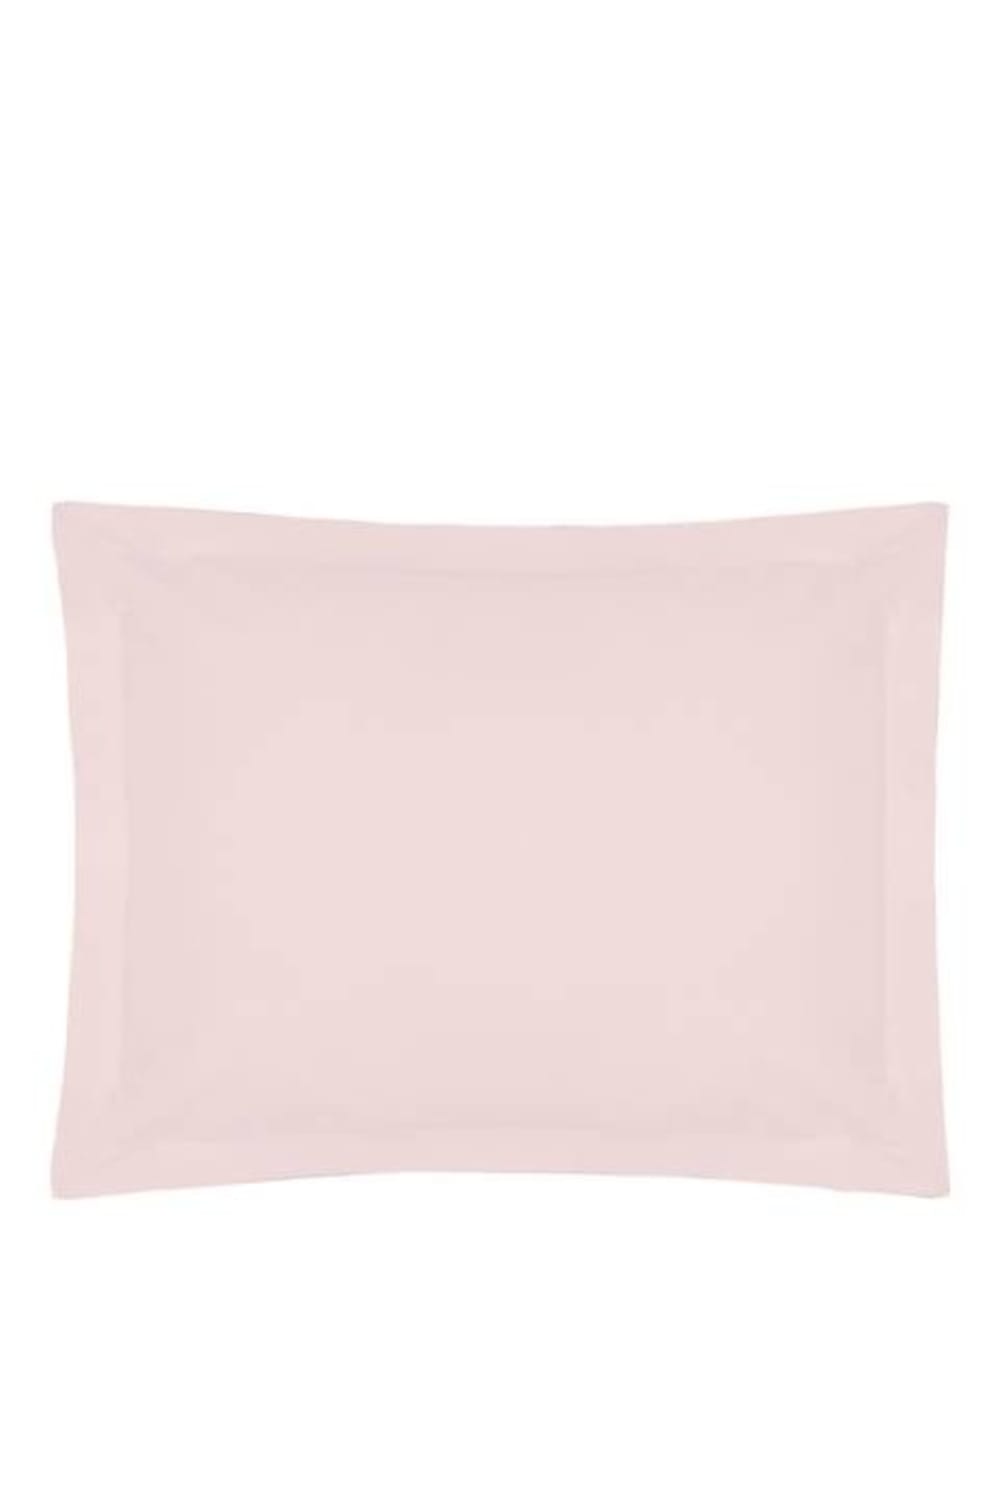 Belledorm 200 Thread Count Egyptian Cotton Oxford Pillowcase (Powder Pink) (One Size)